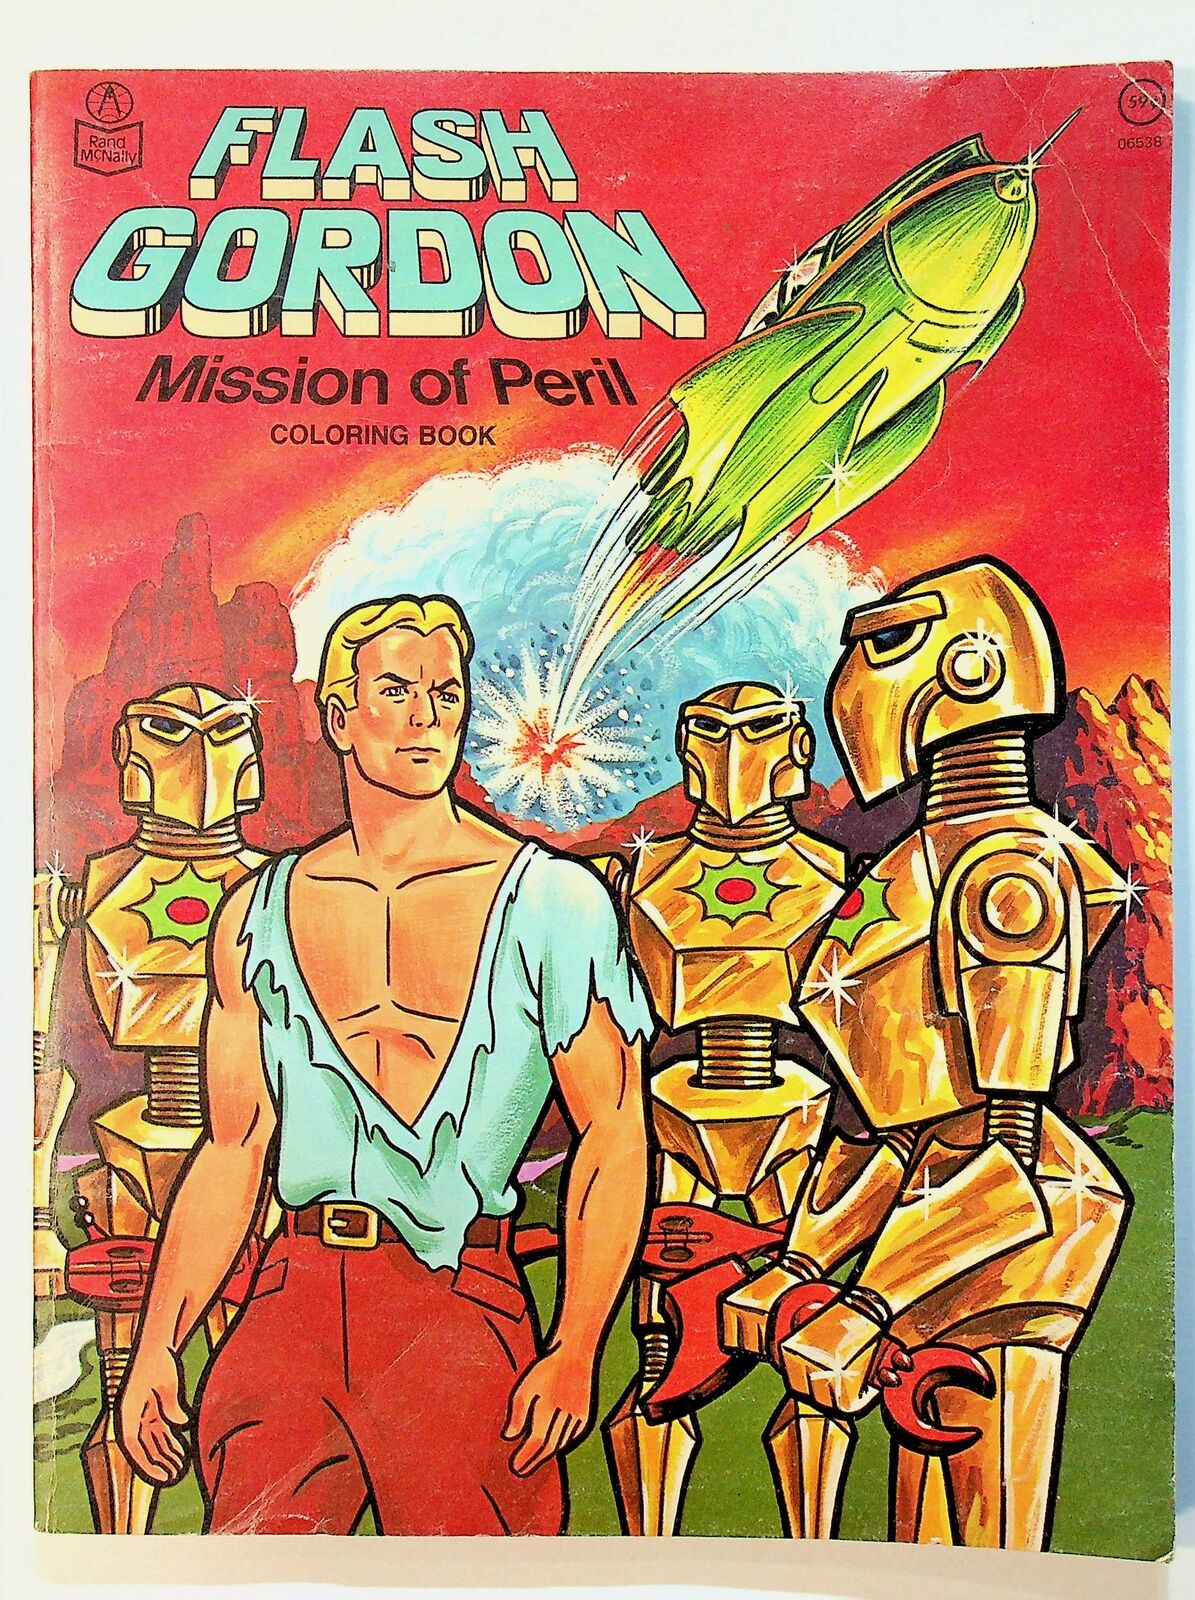 Flash Gordon Mission of Peril Coloring Book #6538 VG- 3.5 1979 Low Grade